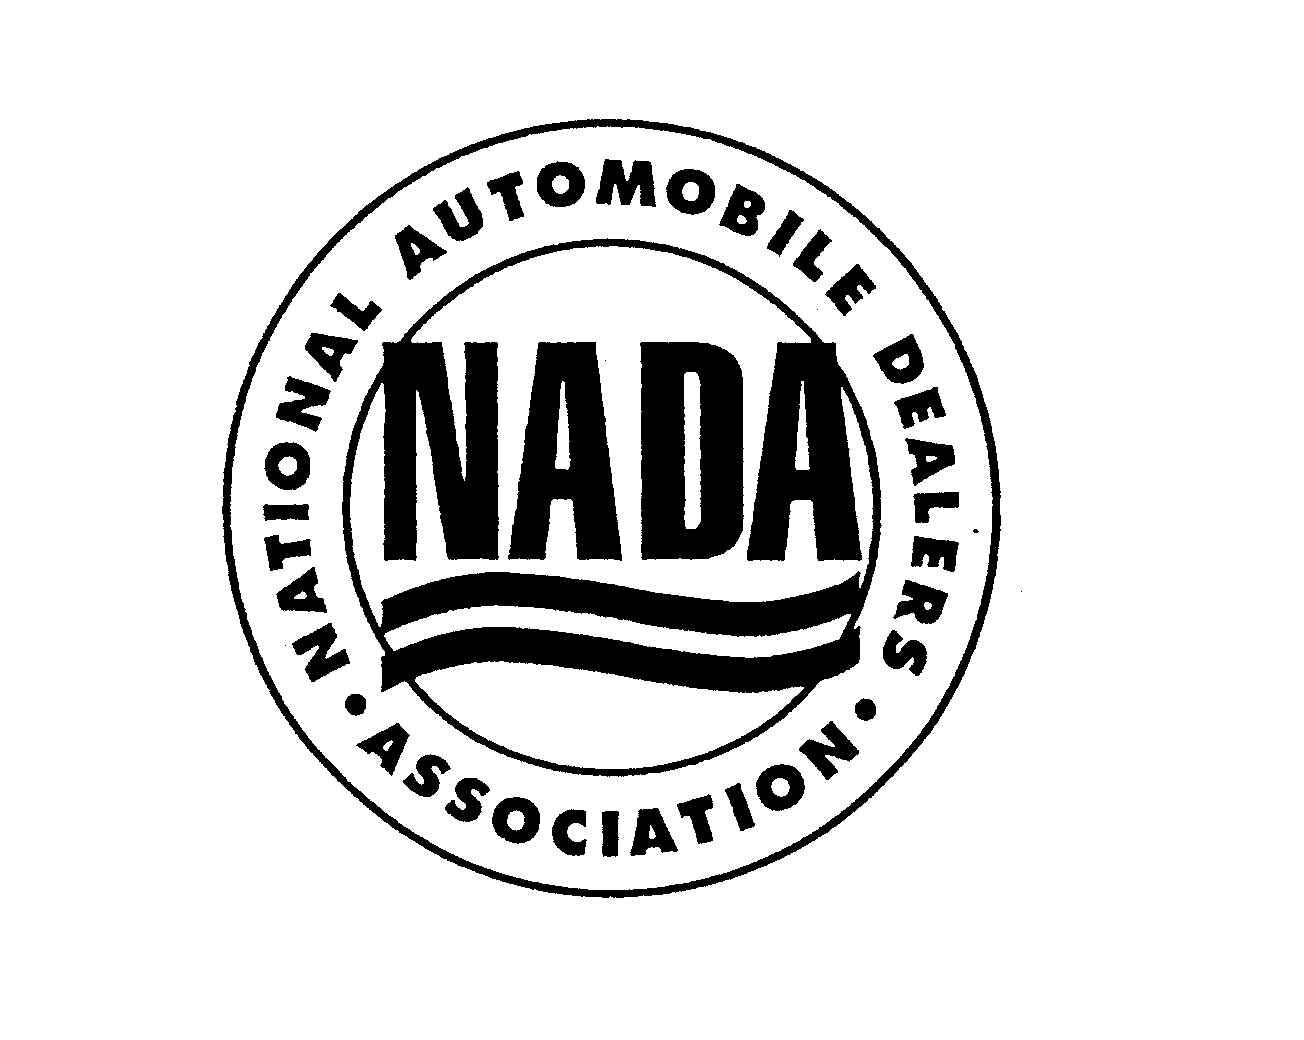  NADA NATIONAL AUTOMOBILE DEALERS ASSOCIATION